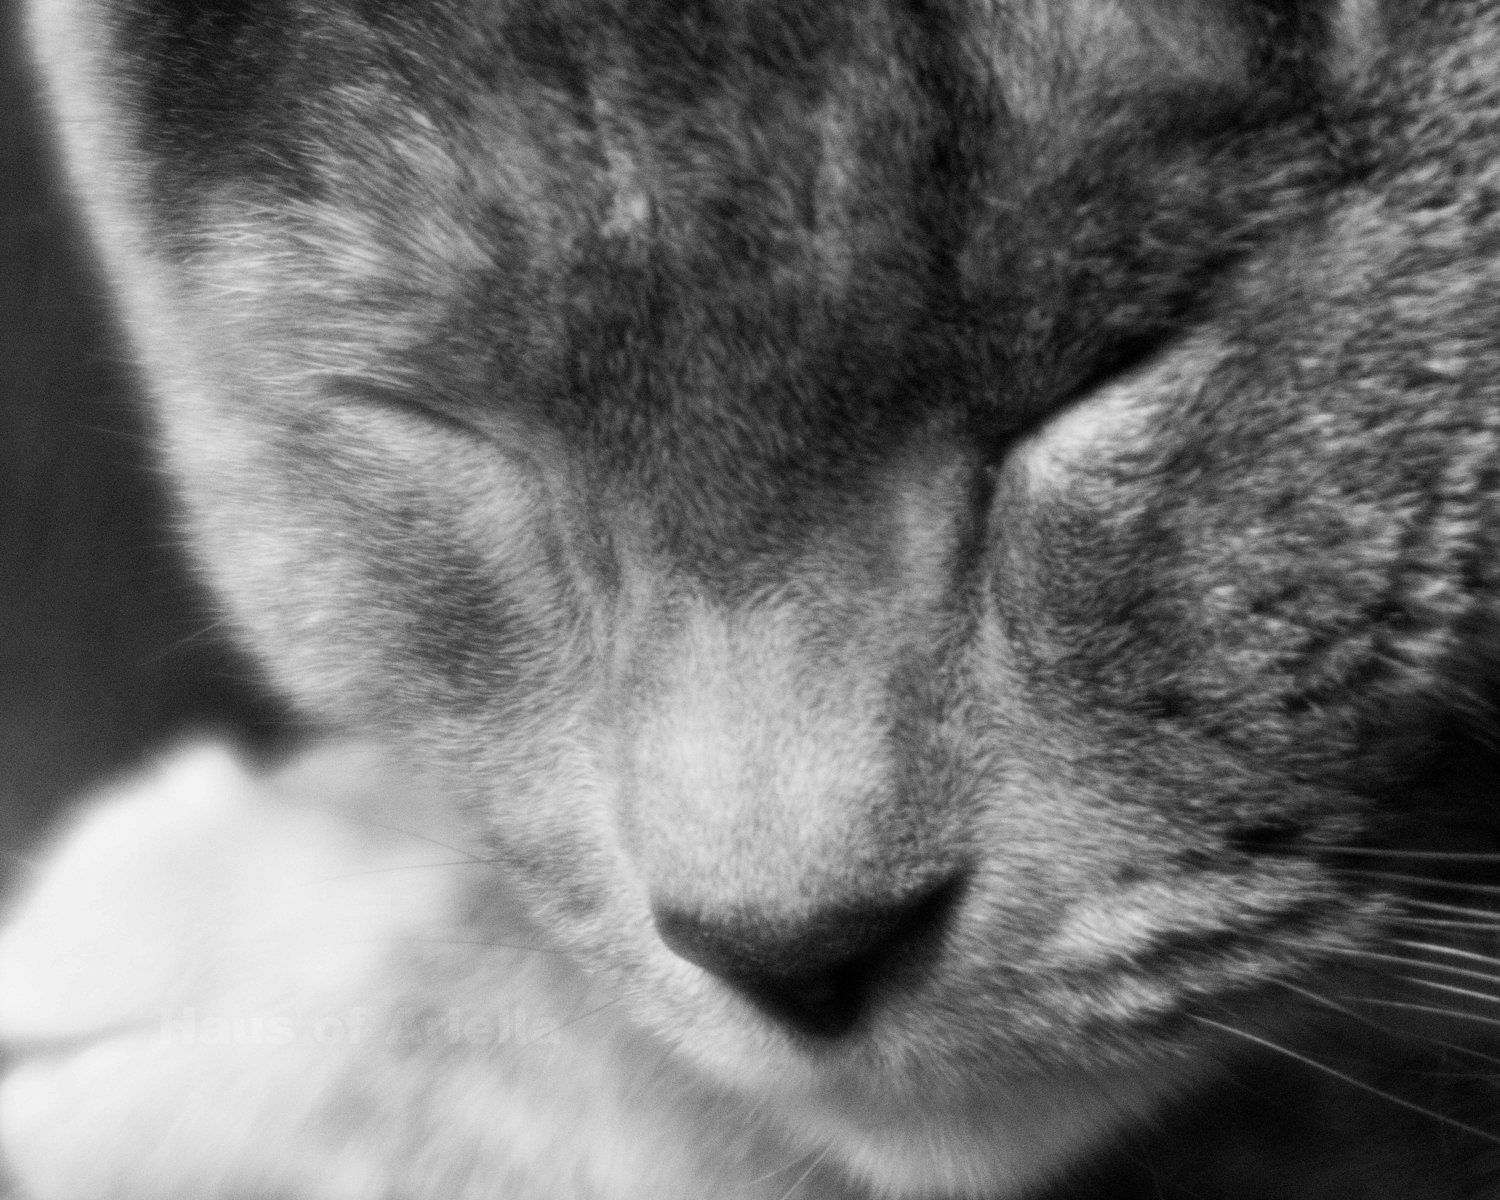 Cat Art Print, Black and White Animal Photography, Calico Photo, 8x10 Photograph, Tortoiseshell Cat - HausofAriella